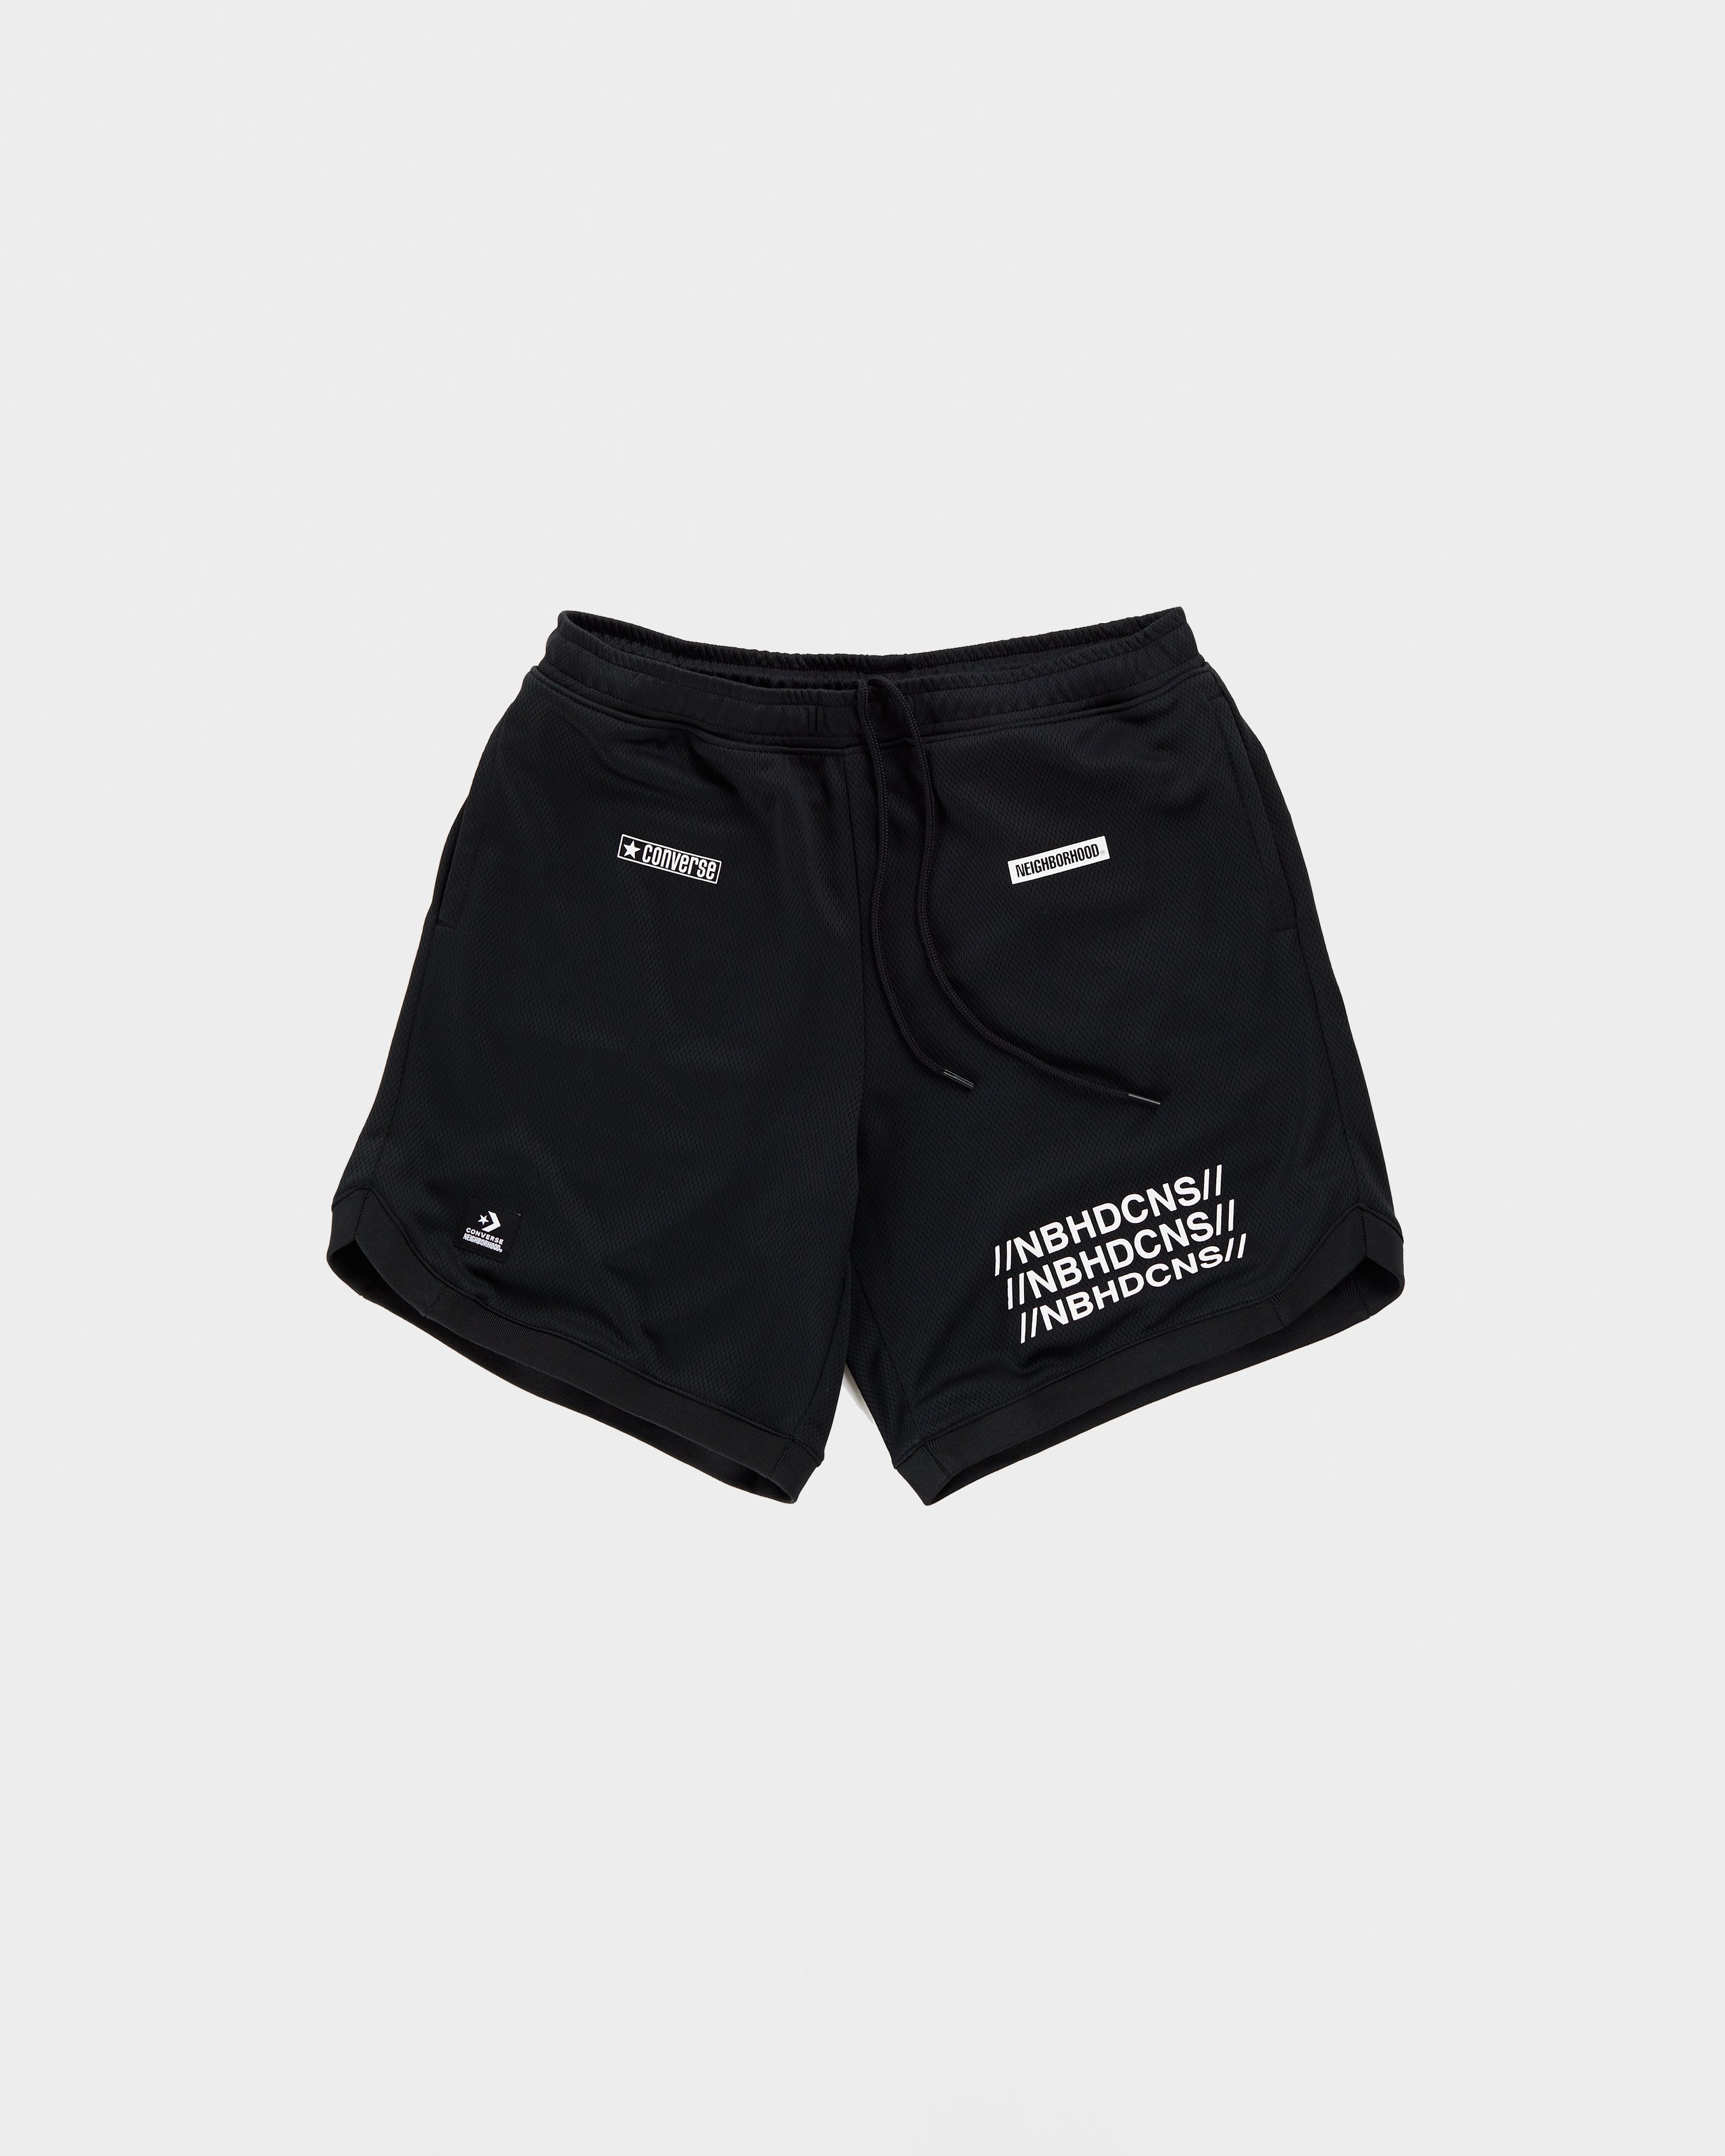 NBHD x Converse - Black Shorts - Clothing - Black - Image 1